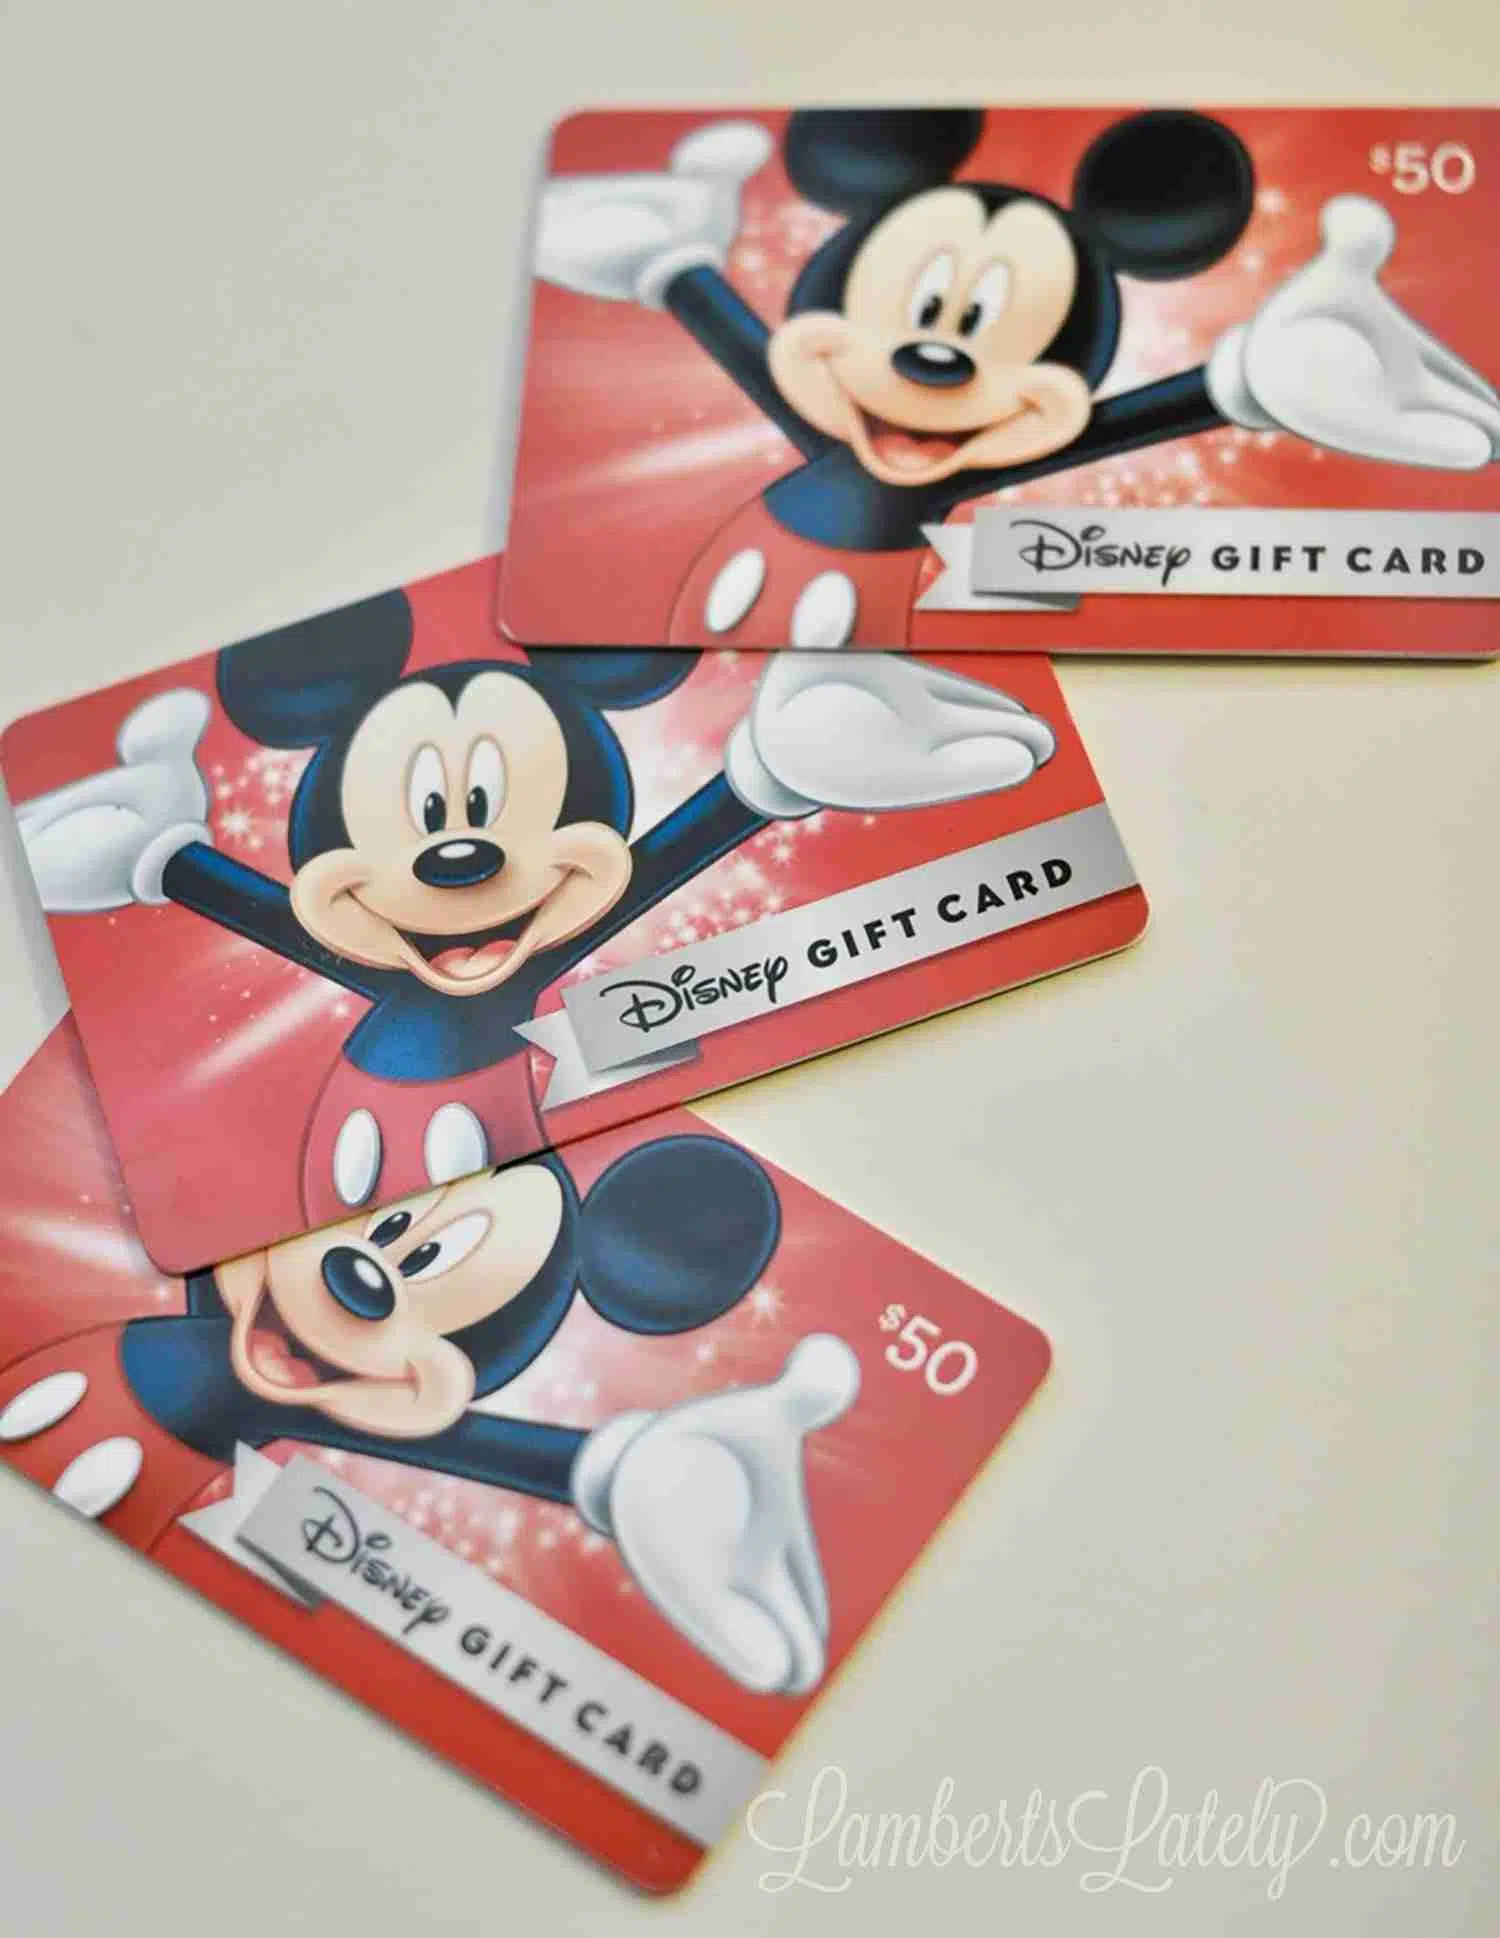 Disney gift cards